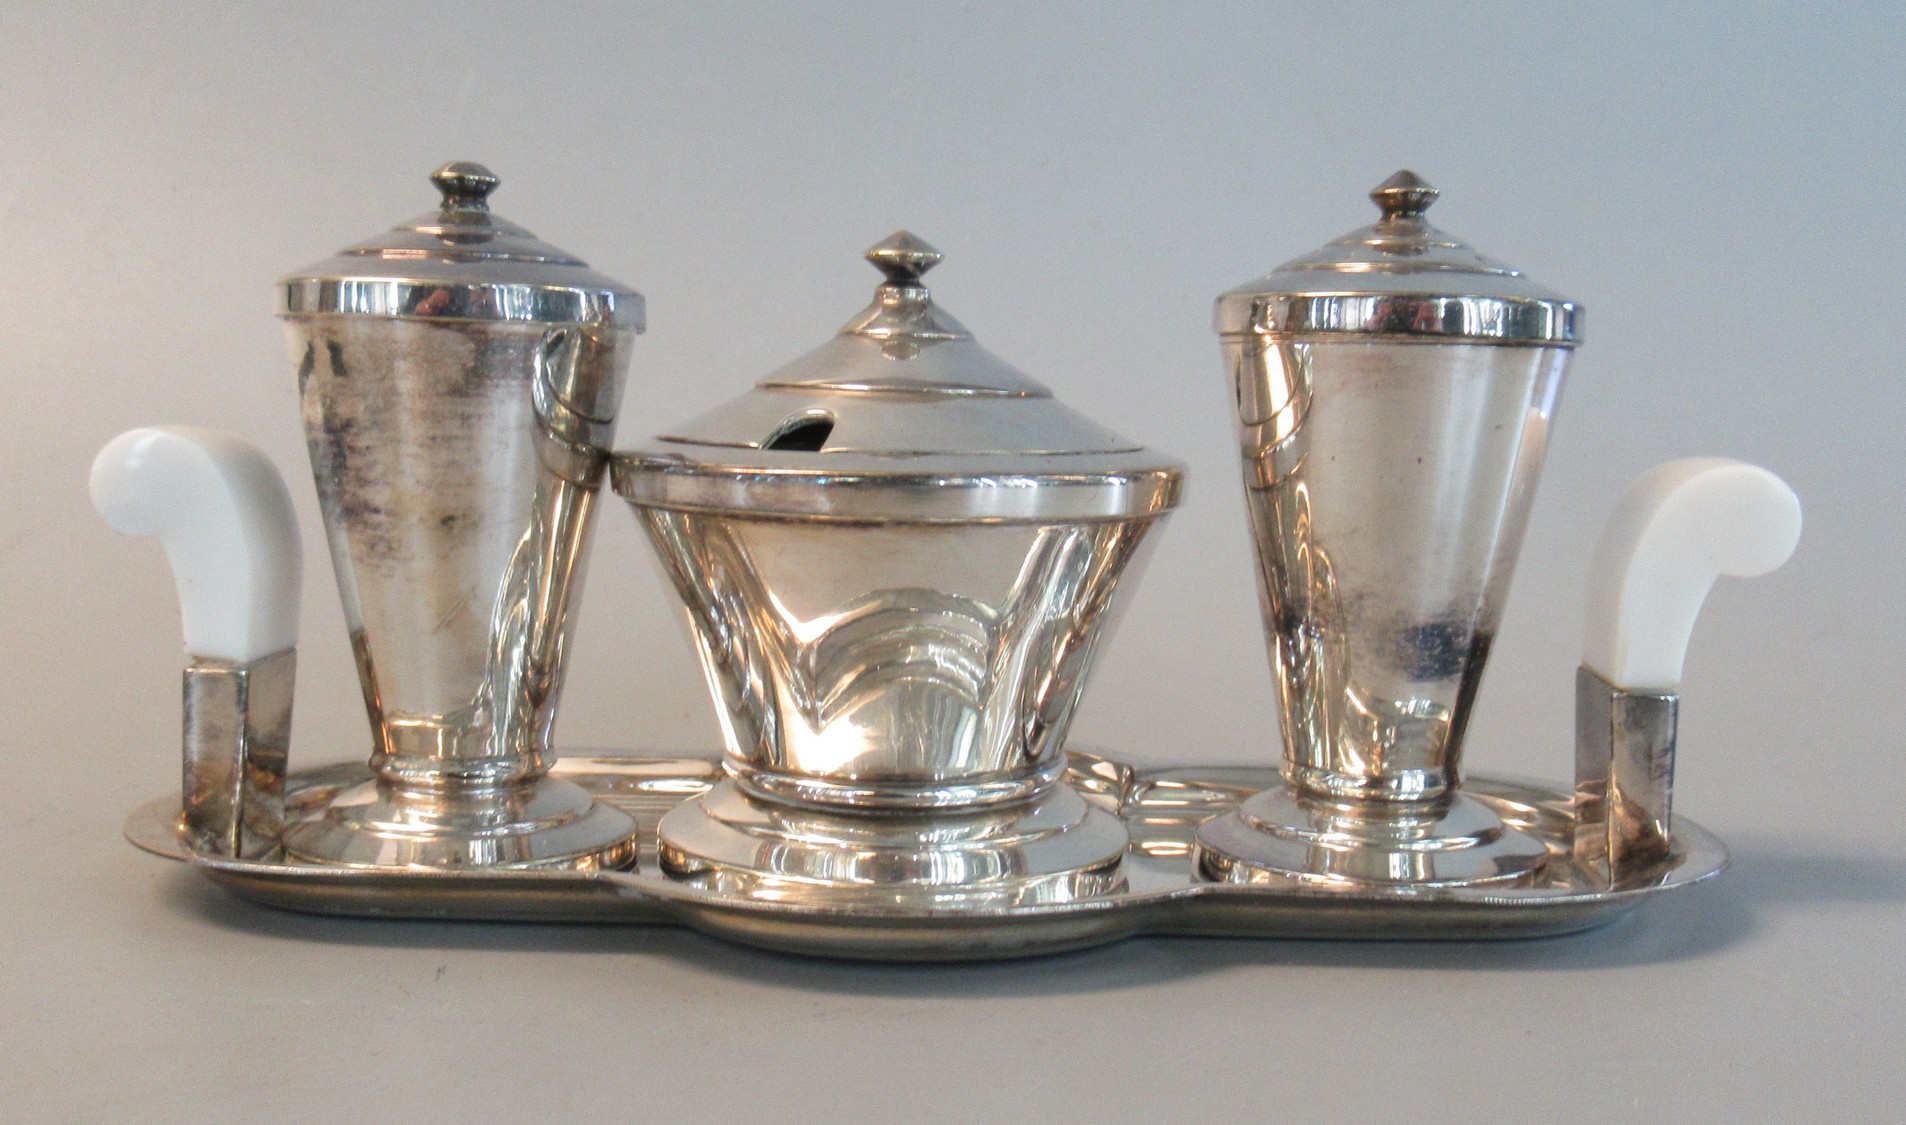 An Art Deco silver plated 3 piece cruet set with white bakelite handles on stand. (B.P. 21% + VAT)